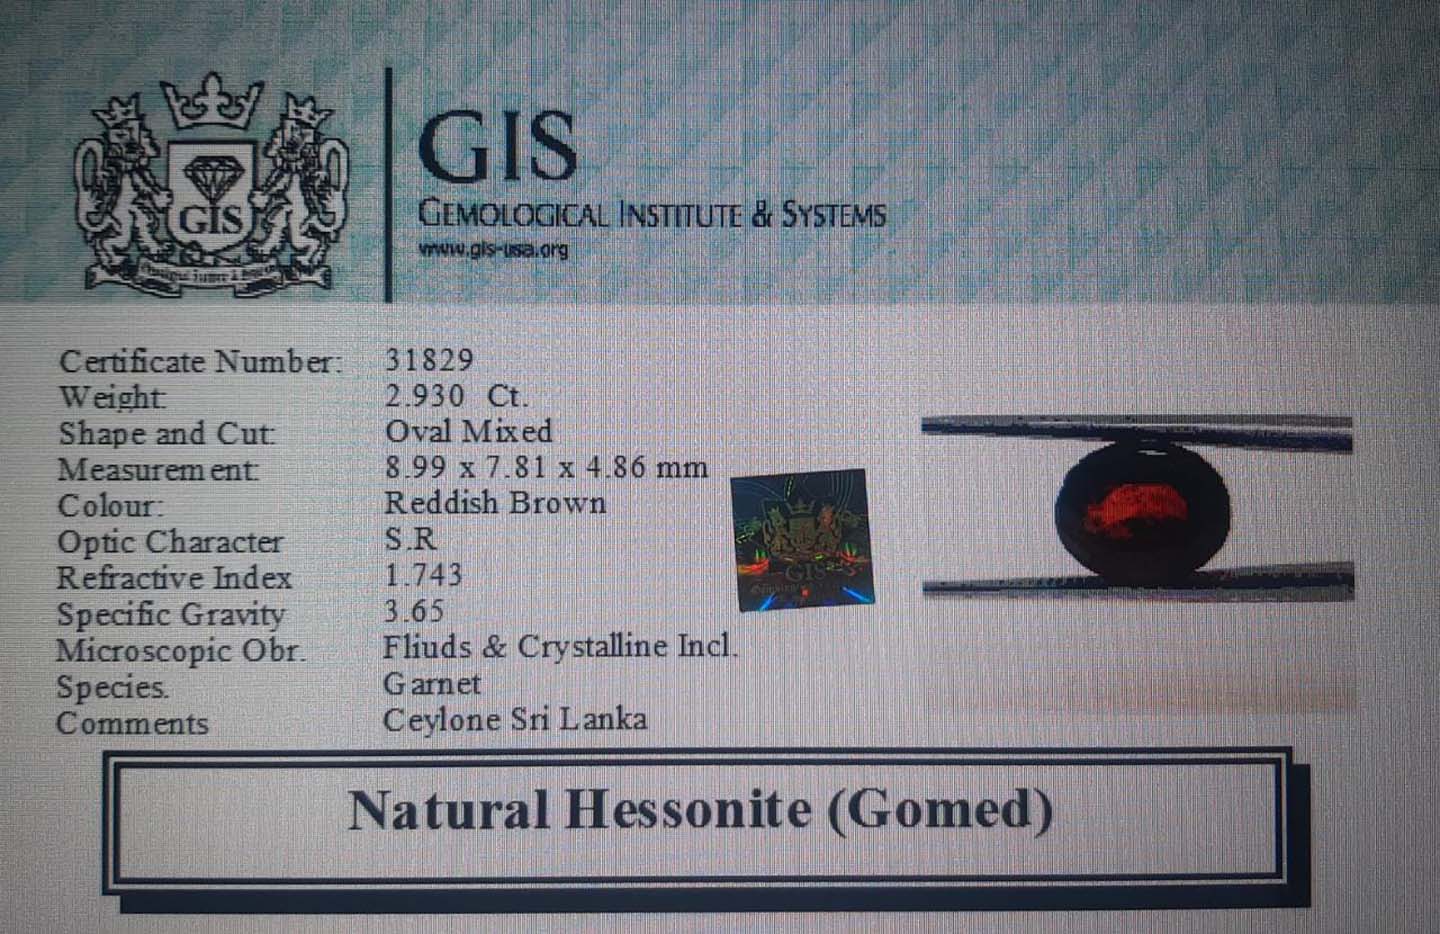 Hessonite (Gomed) 2.93 Ct.